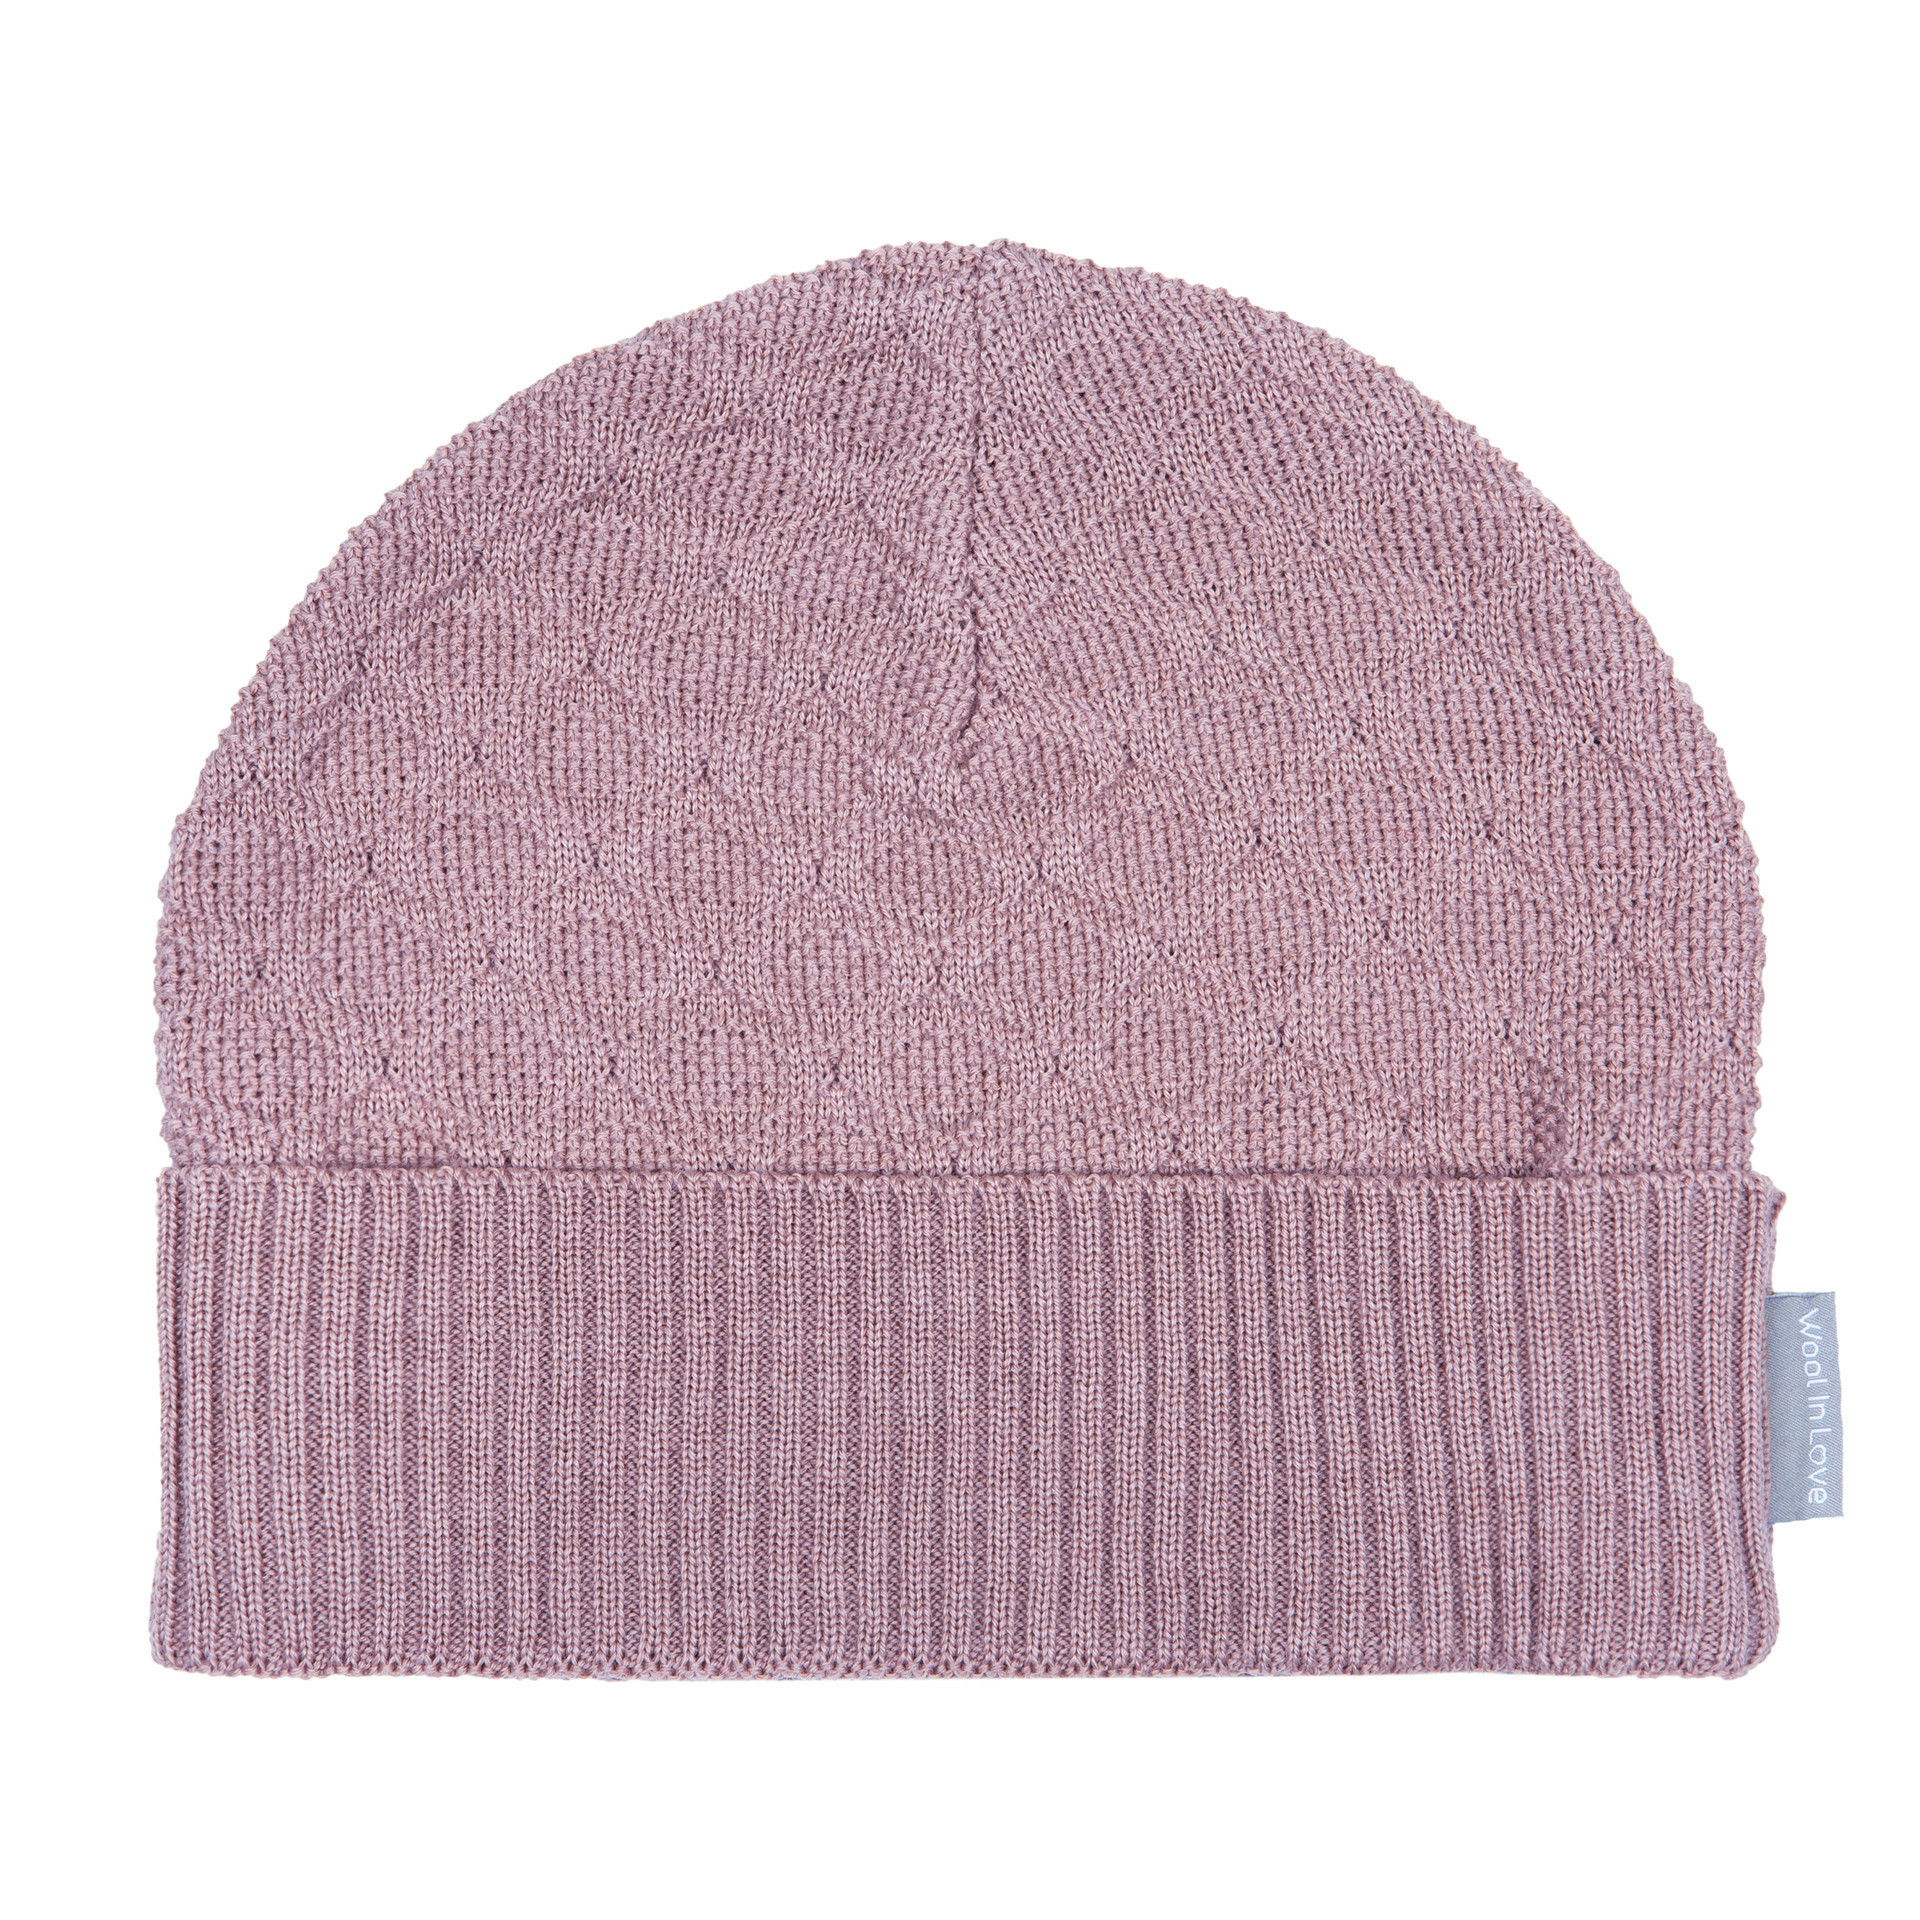 Merino double layer hat HAPPINESS - Lavender - 48/50